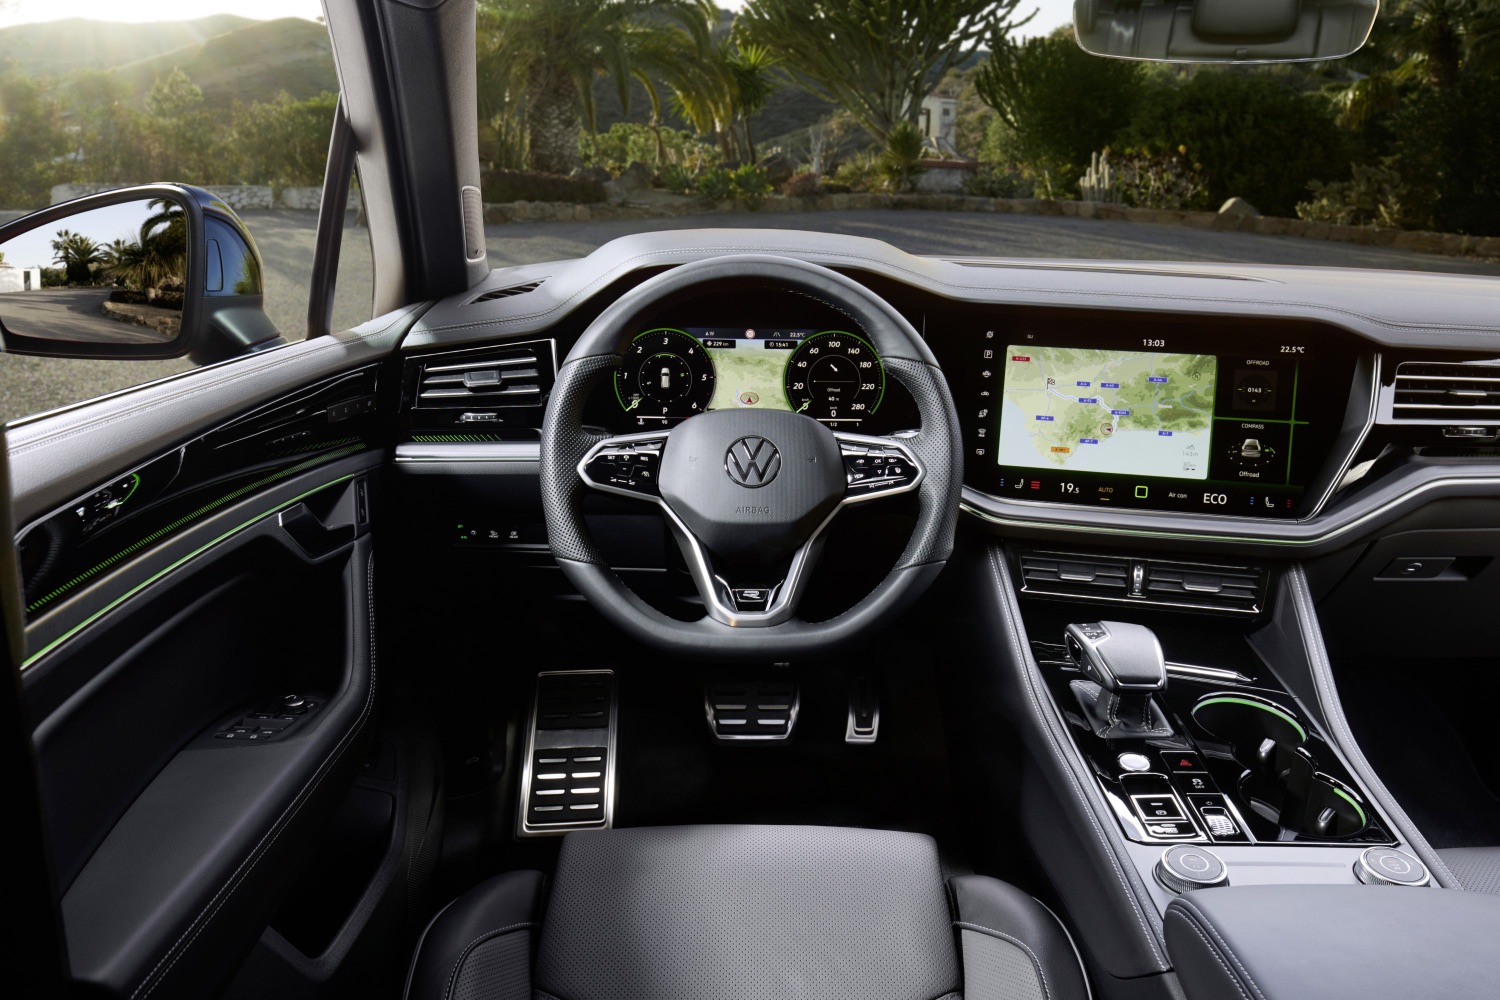 Volkswagen Touareg updated